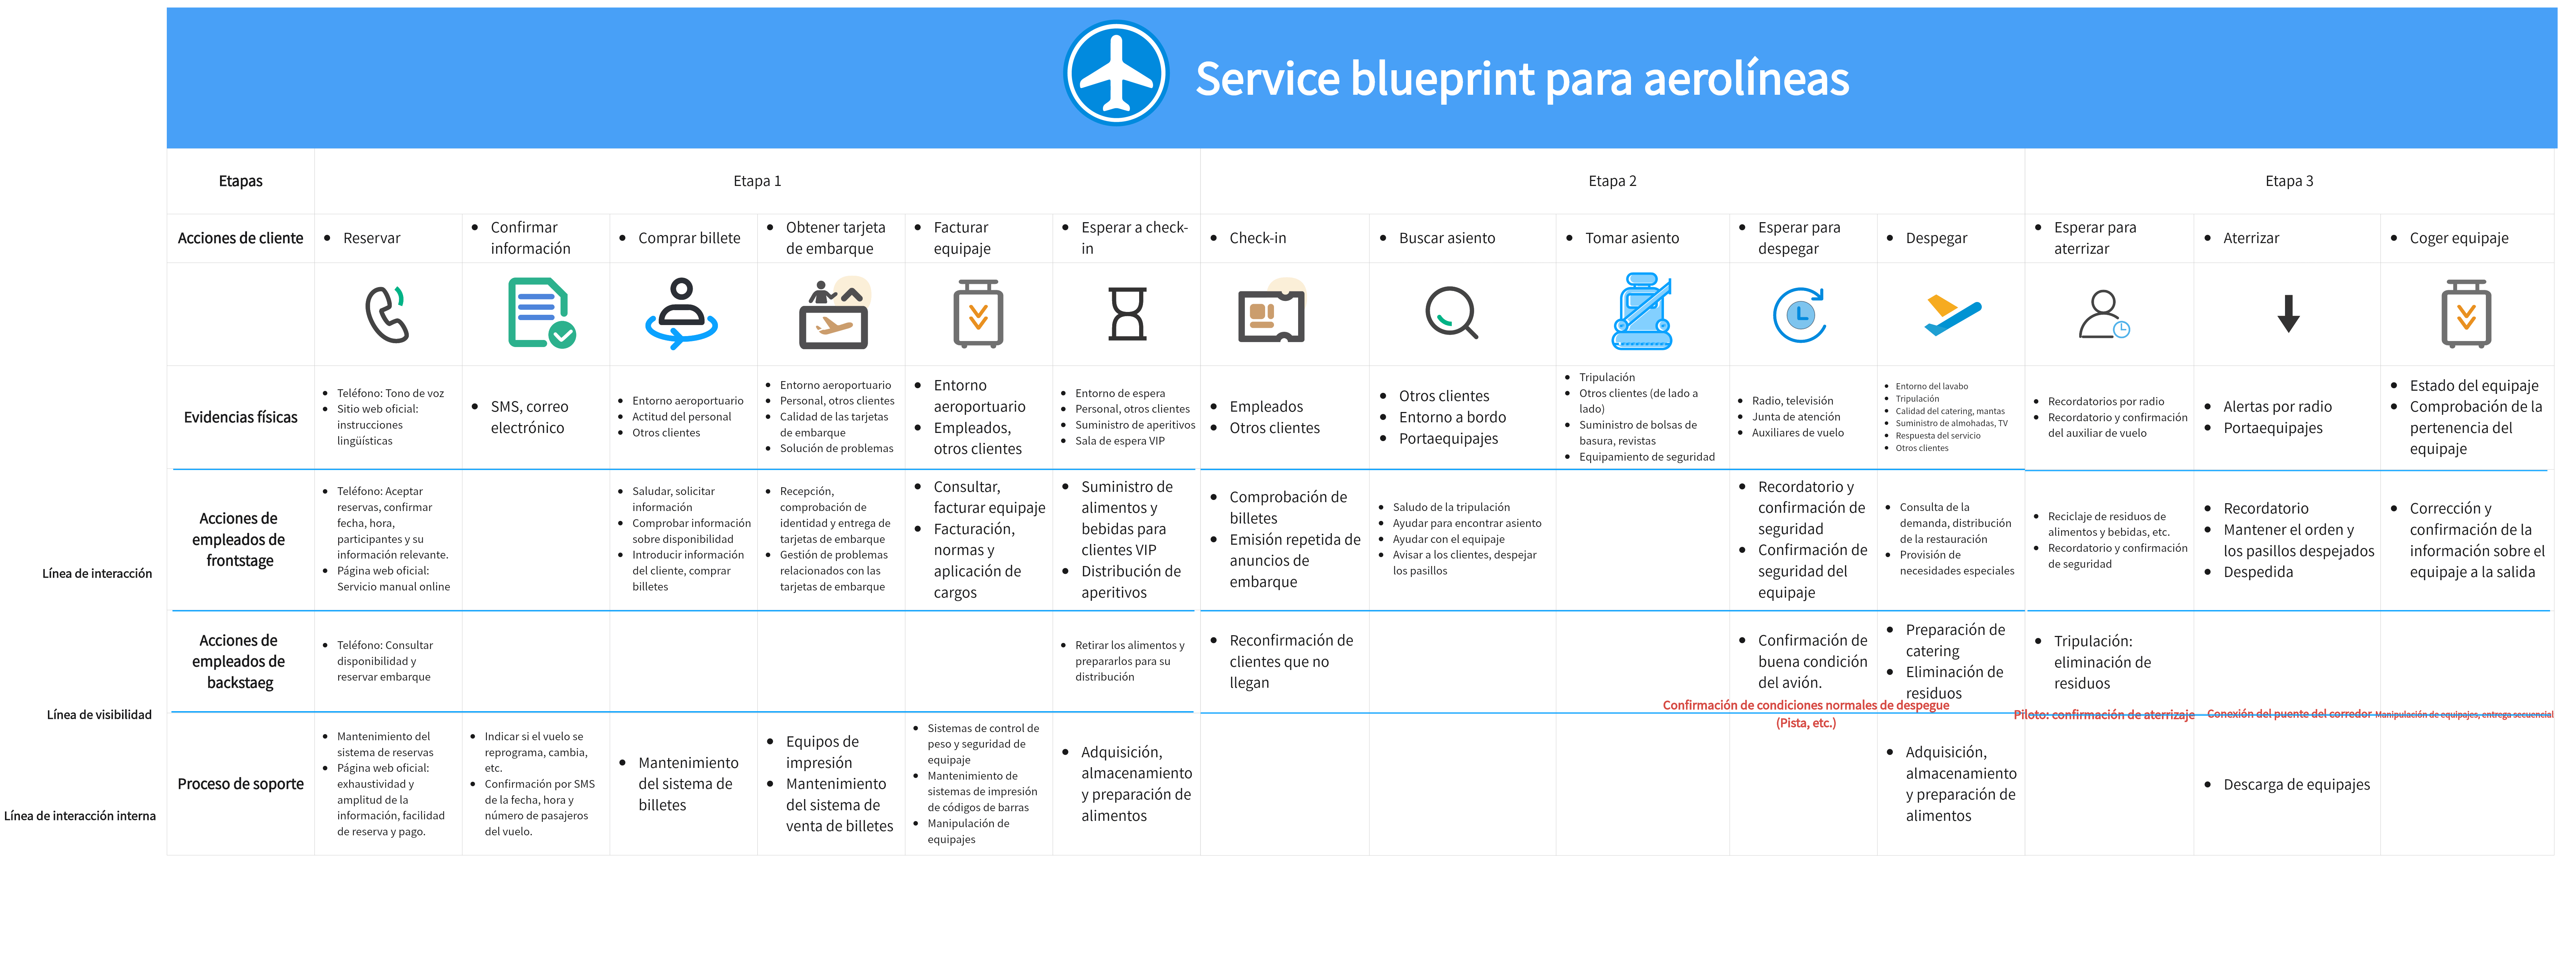 Service blueprint para aerolíneas